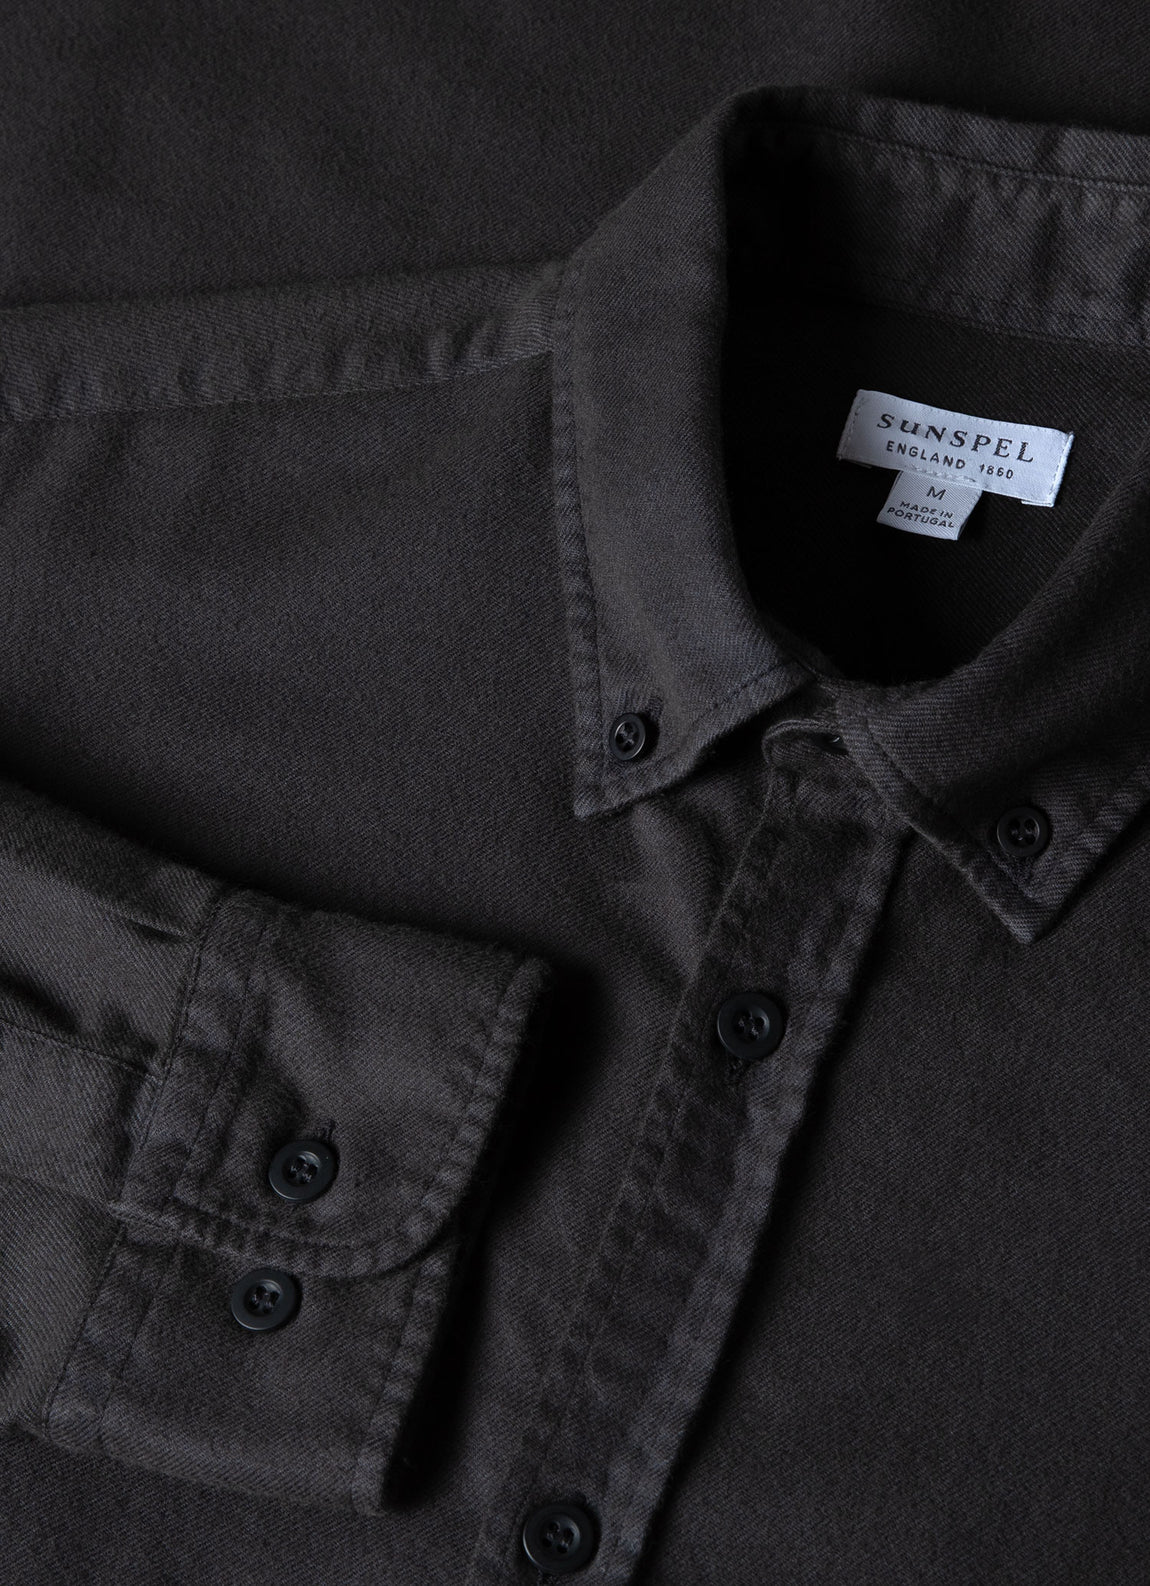 Men's Button Down Flannel Shirt in Anthracite | Sunspel